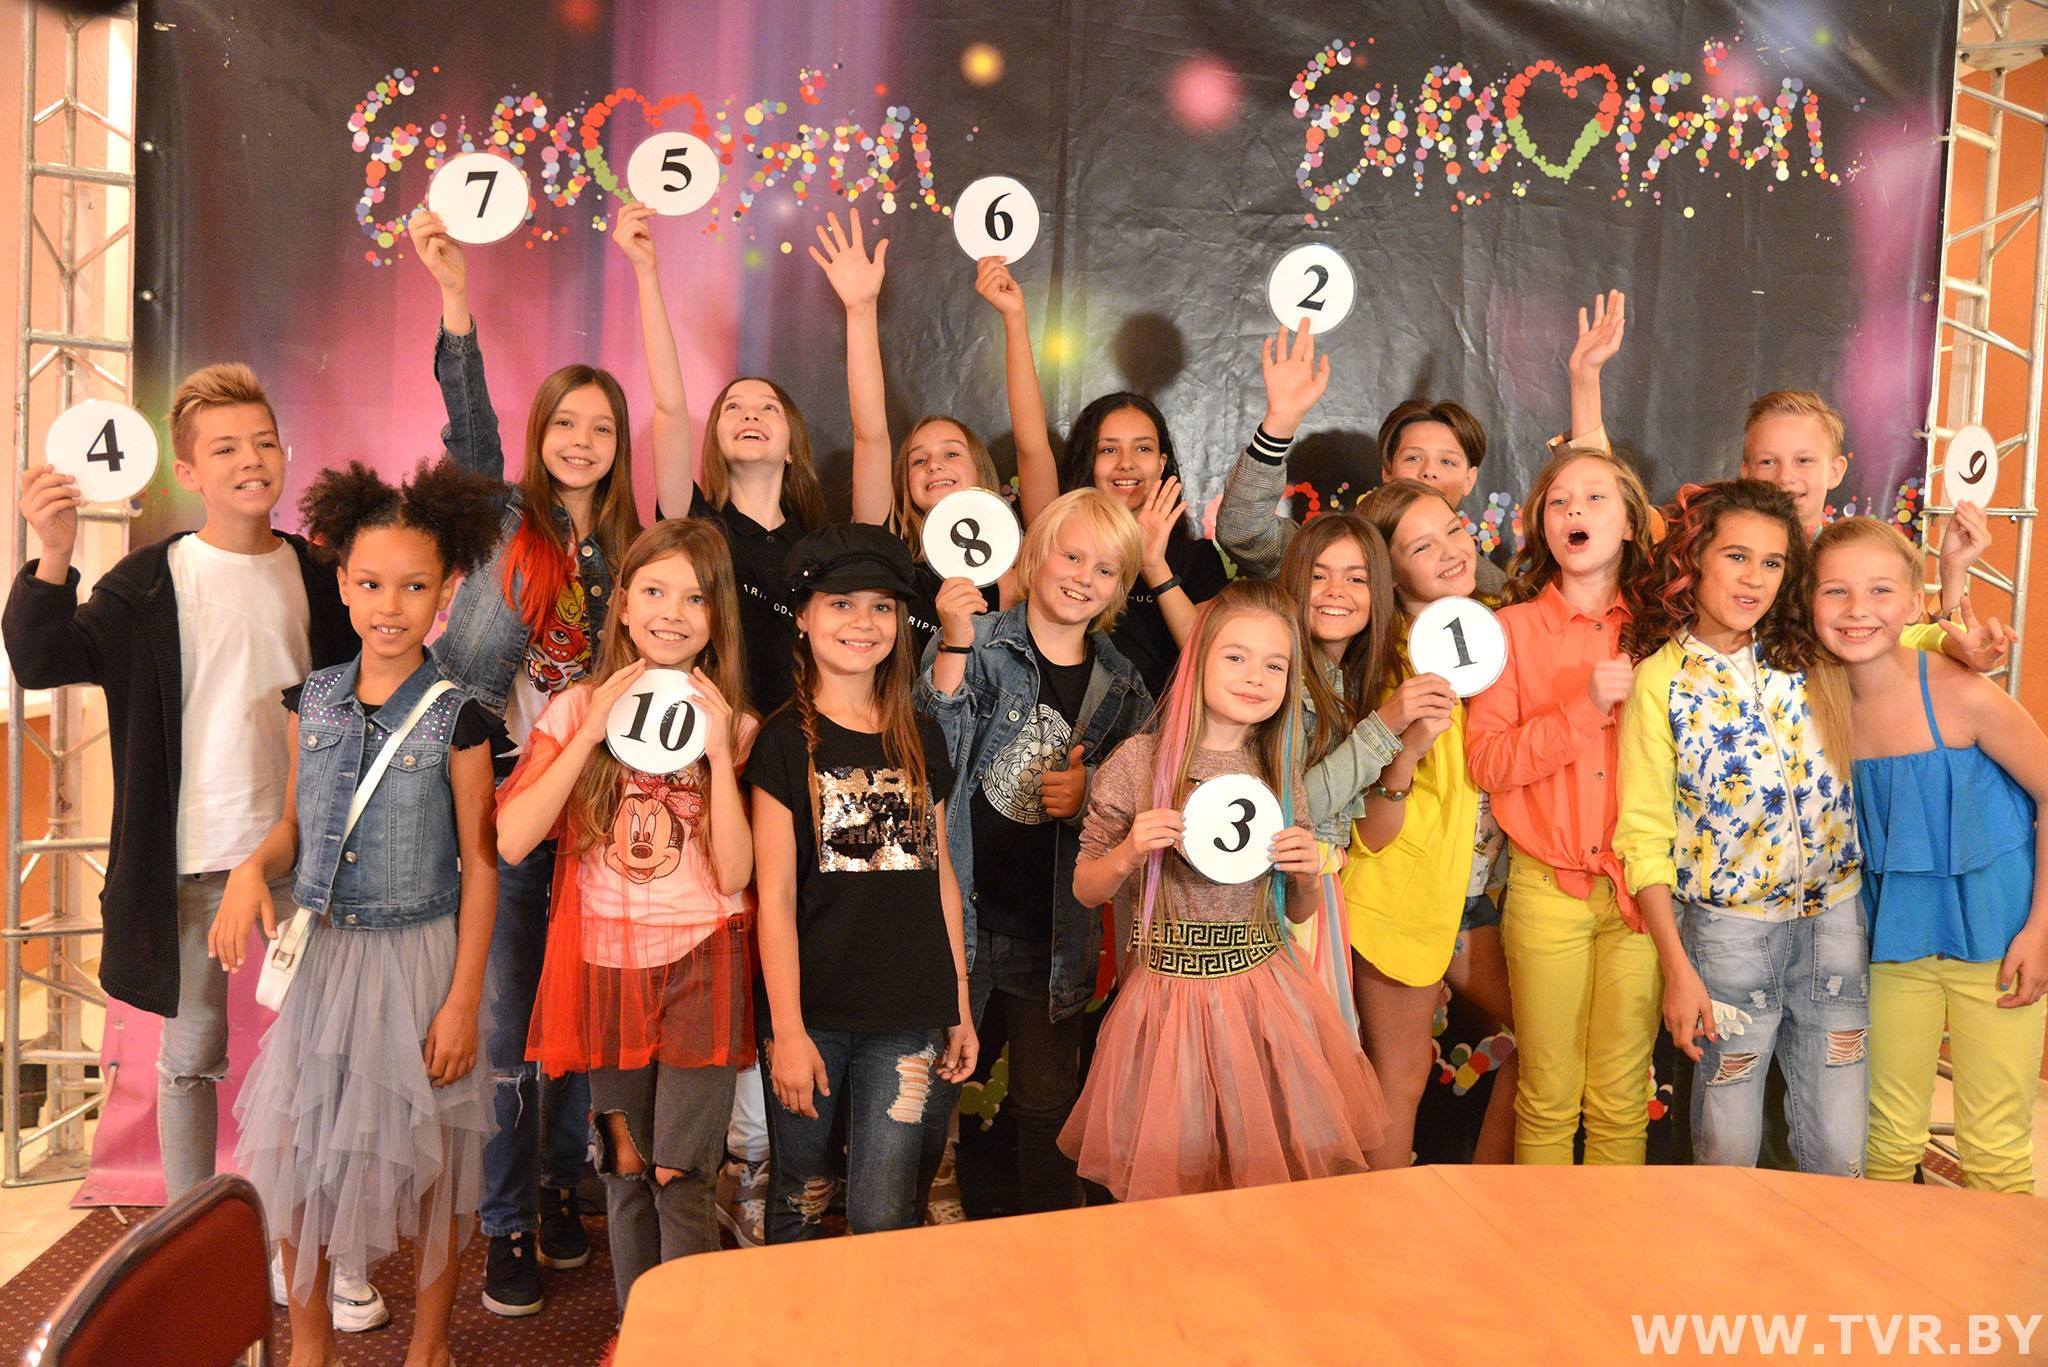 Junior Eurovision: Belarusian final on August 31, running order decided